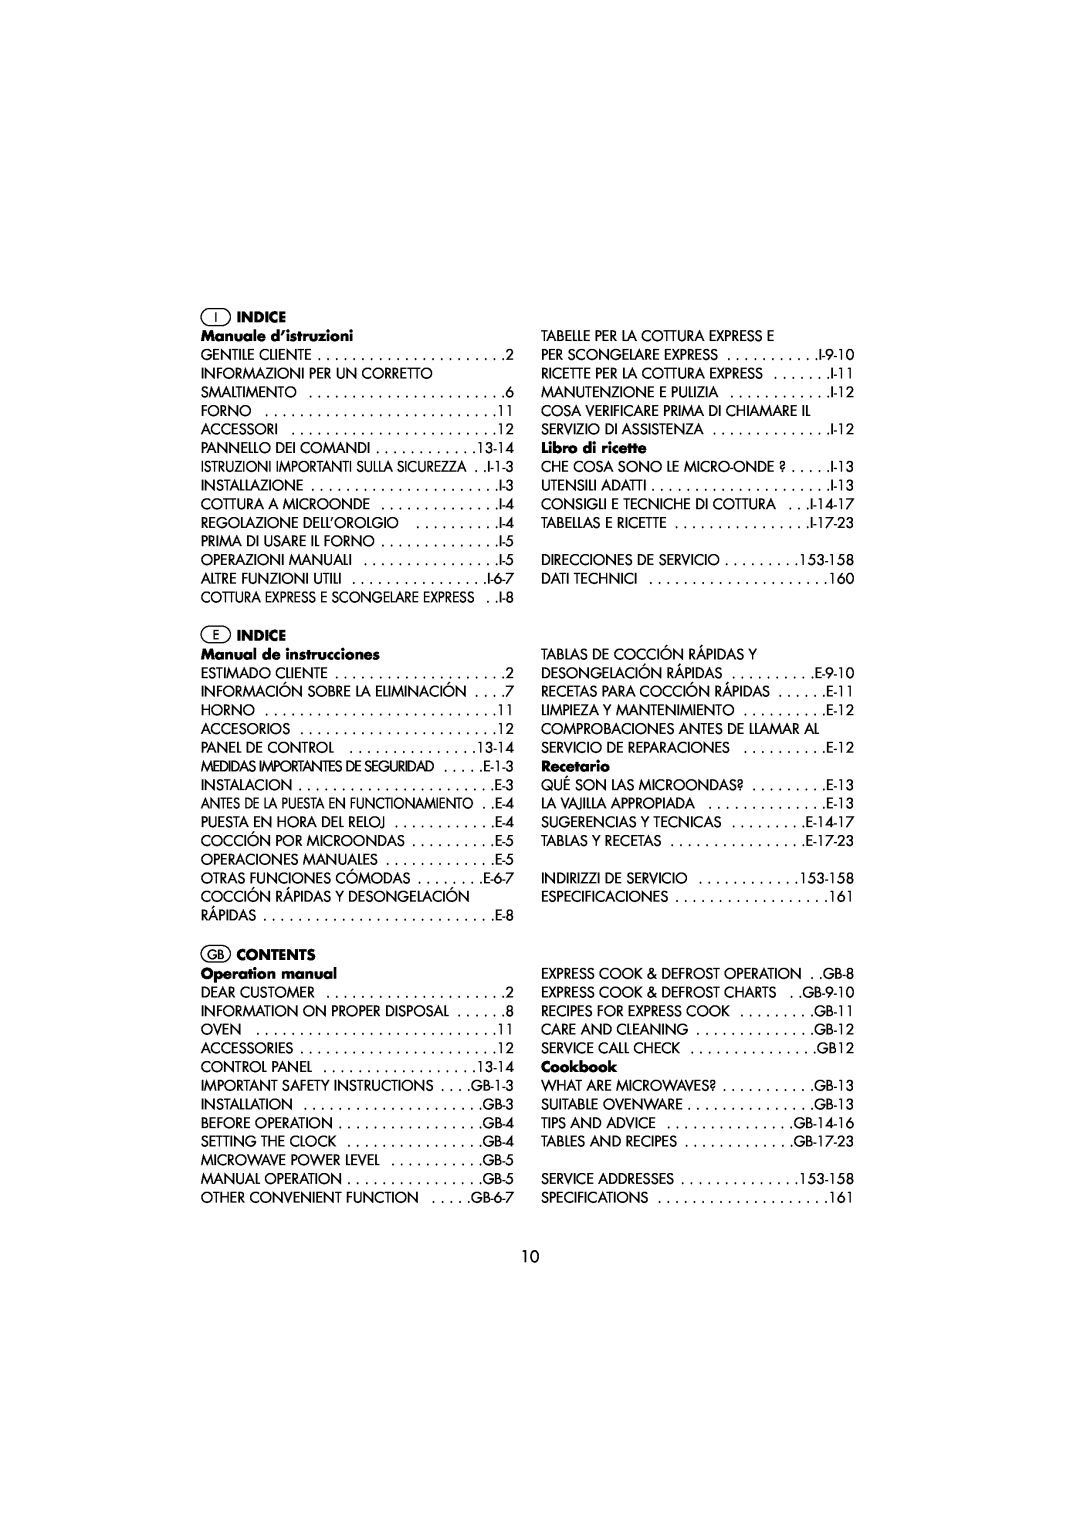 Sharp R-239 IINDICE Manuale d’istruzioni, EINDICE Manual de instrucciones, Libro di ricette, Recetario, Cookbook 